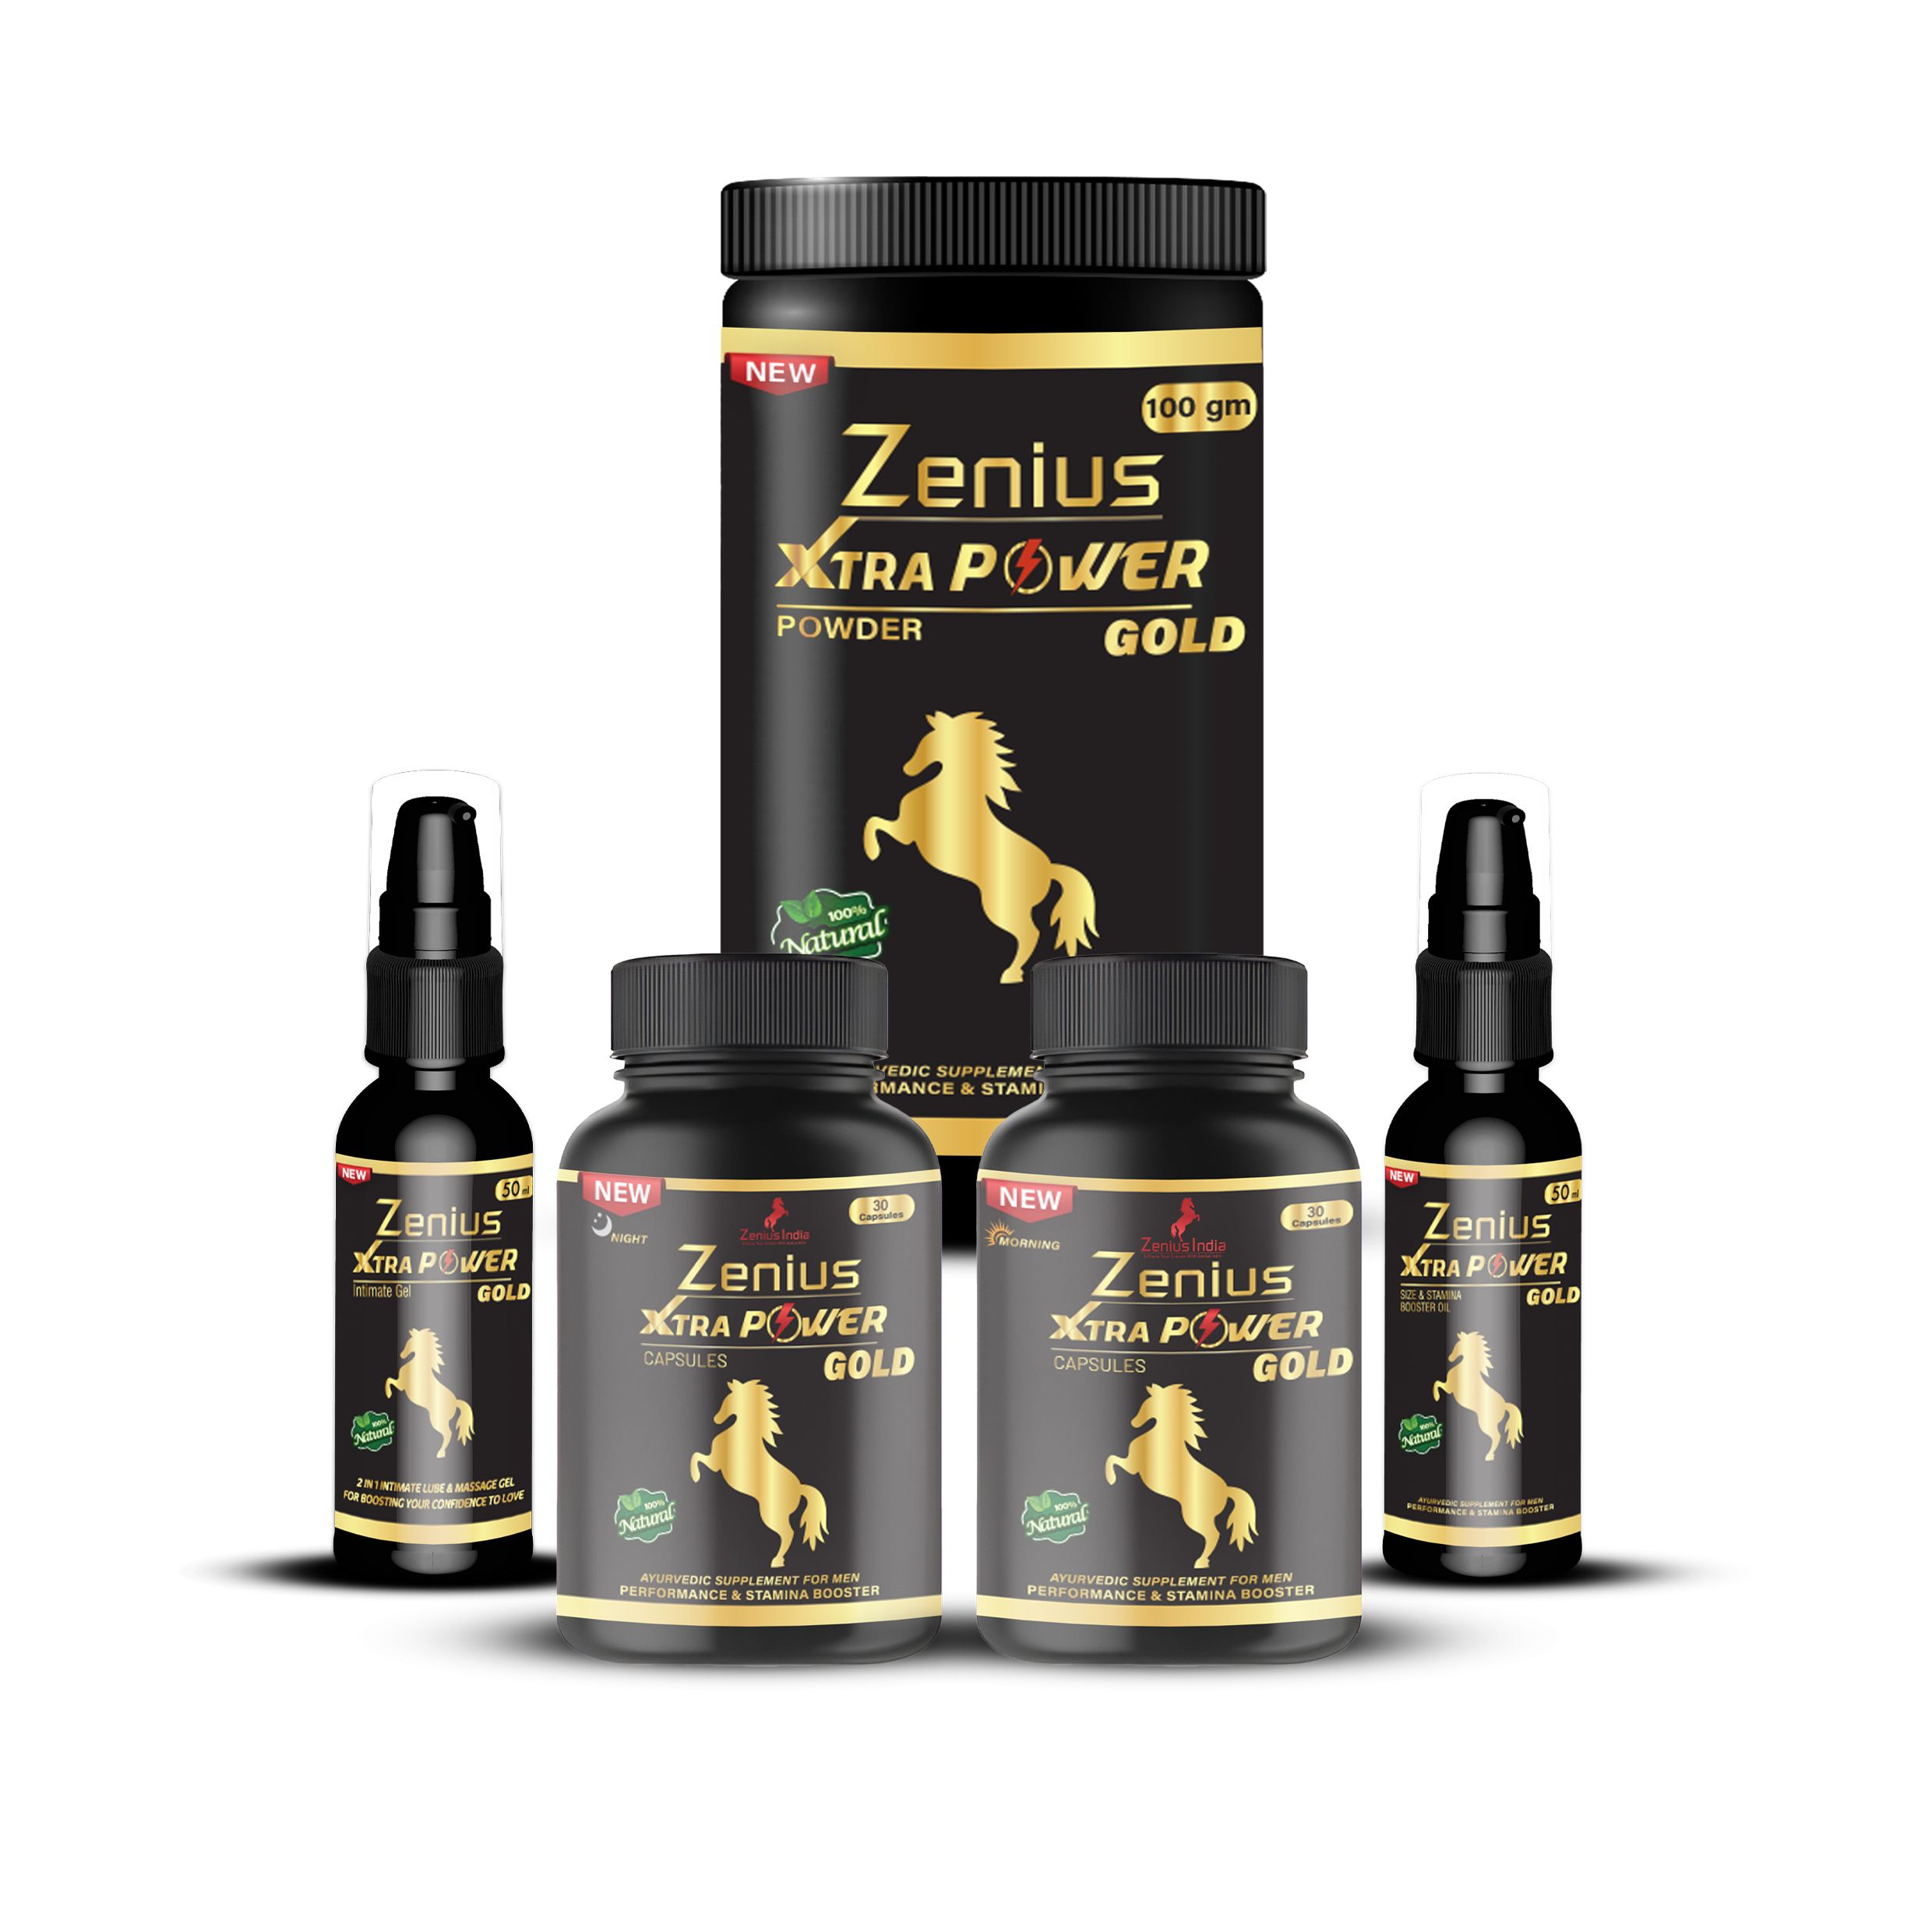 Buy Zenius Xtra Power Gold Kit at Best Price Online